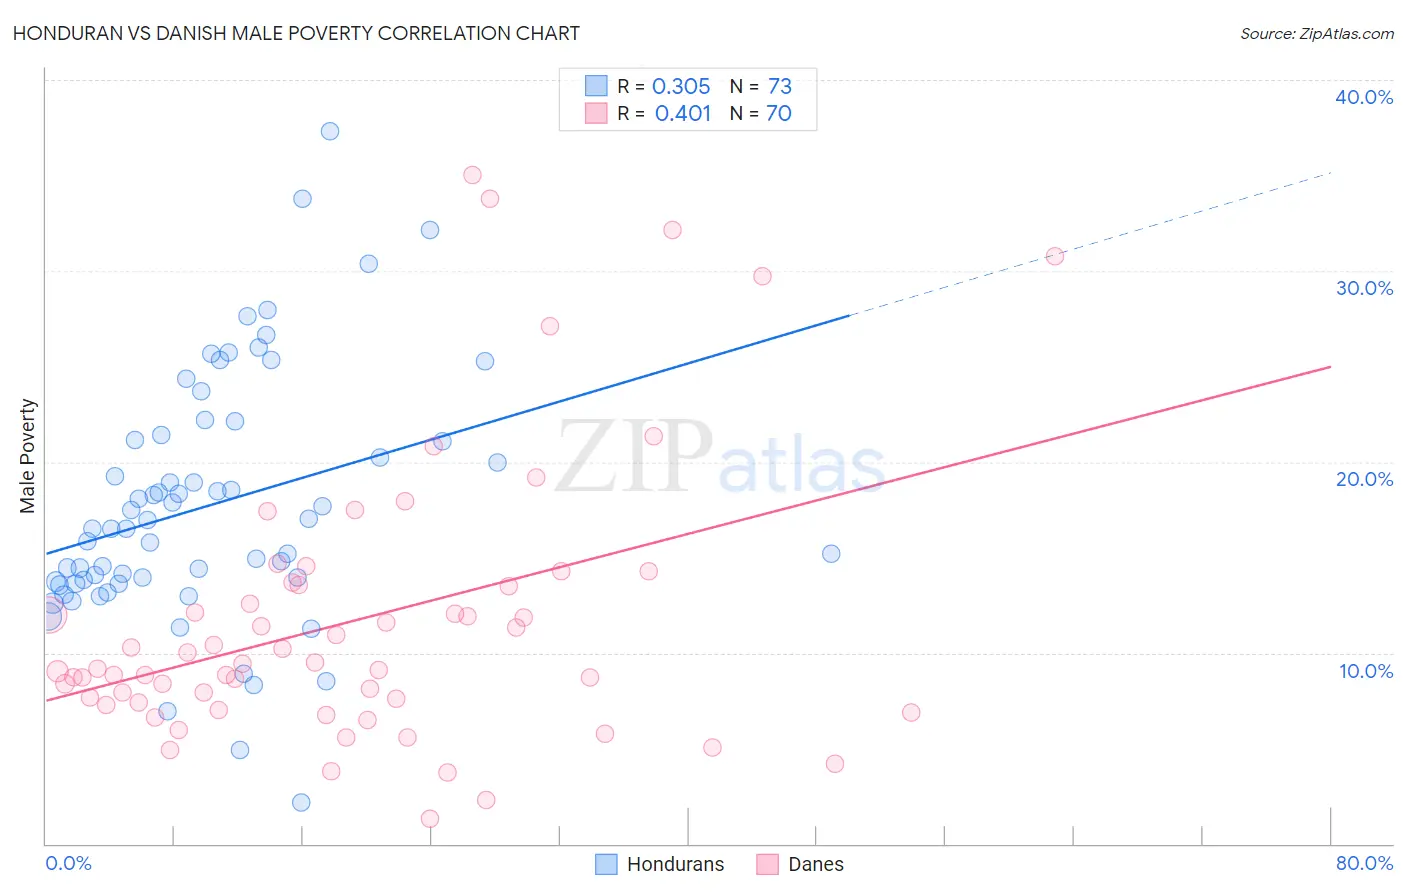 Honduran vs Danish Male Poverty